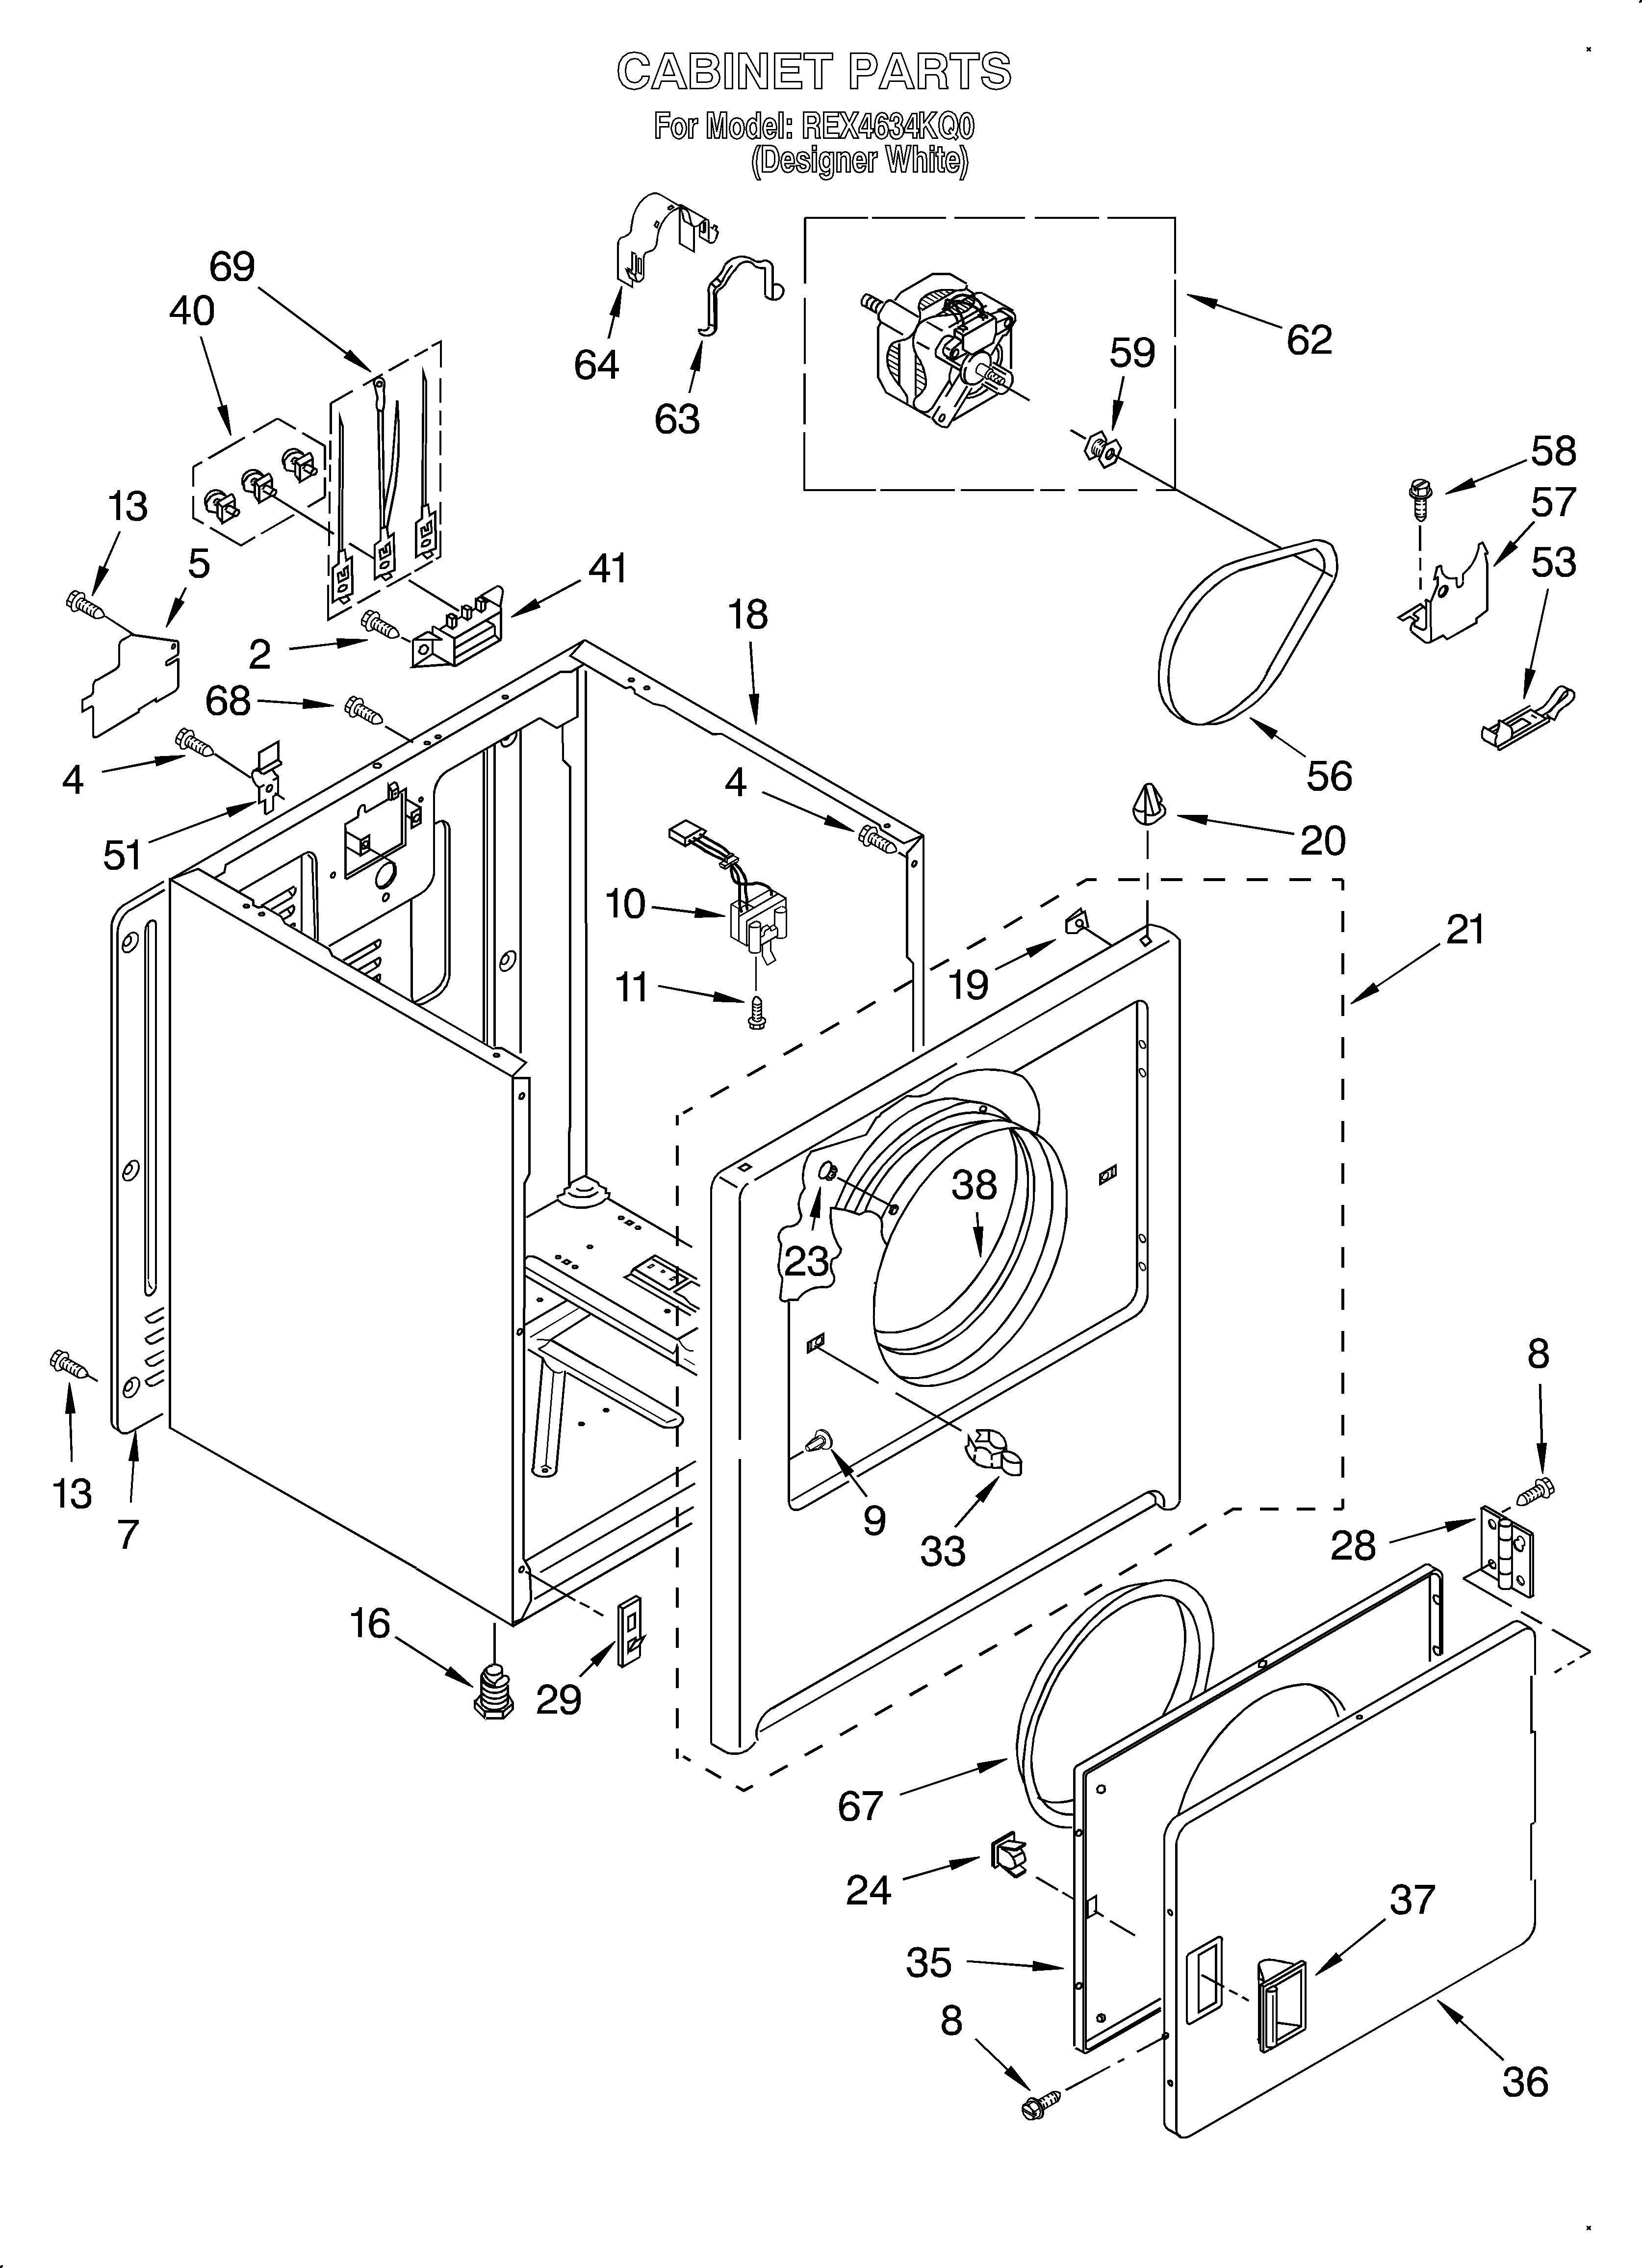 Wiring Diagram For Roper Dryer